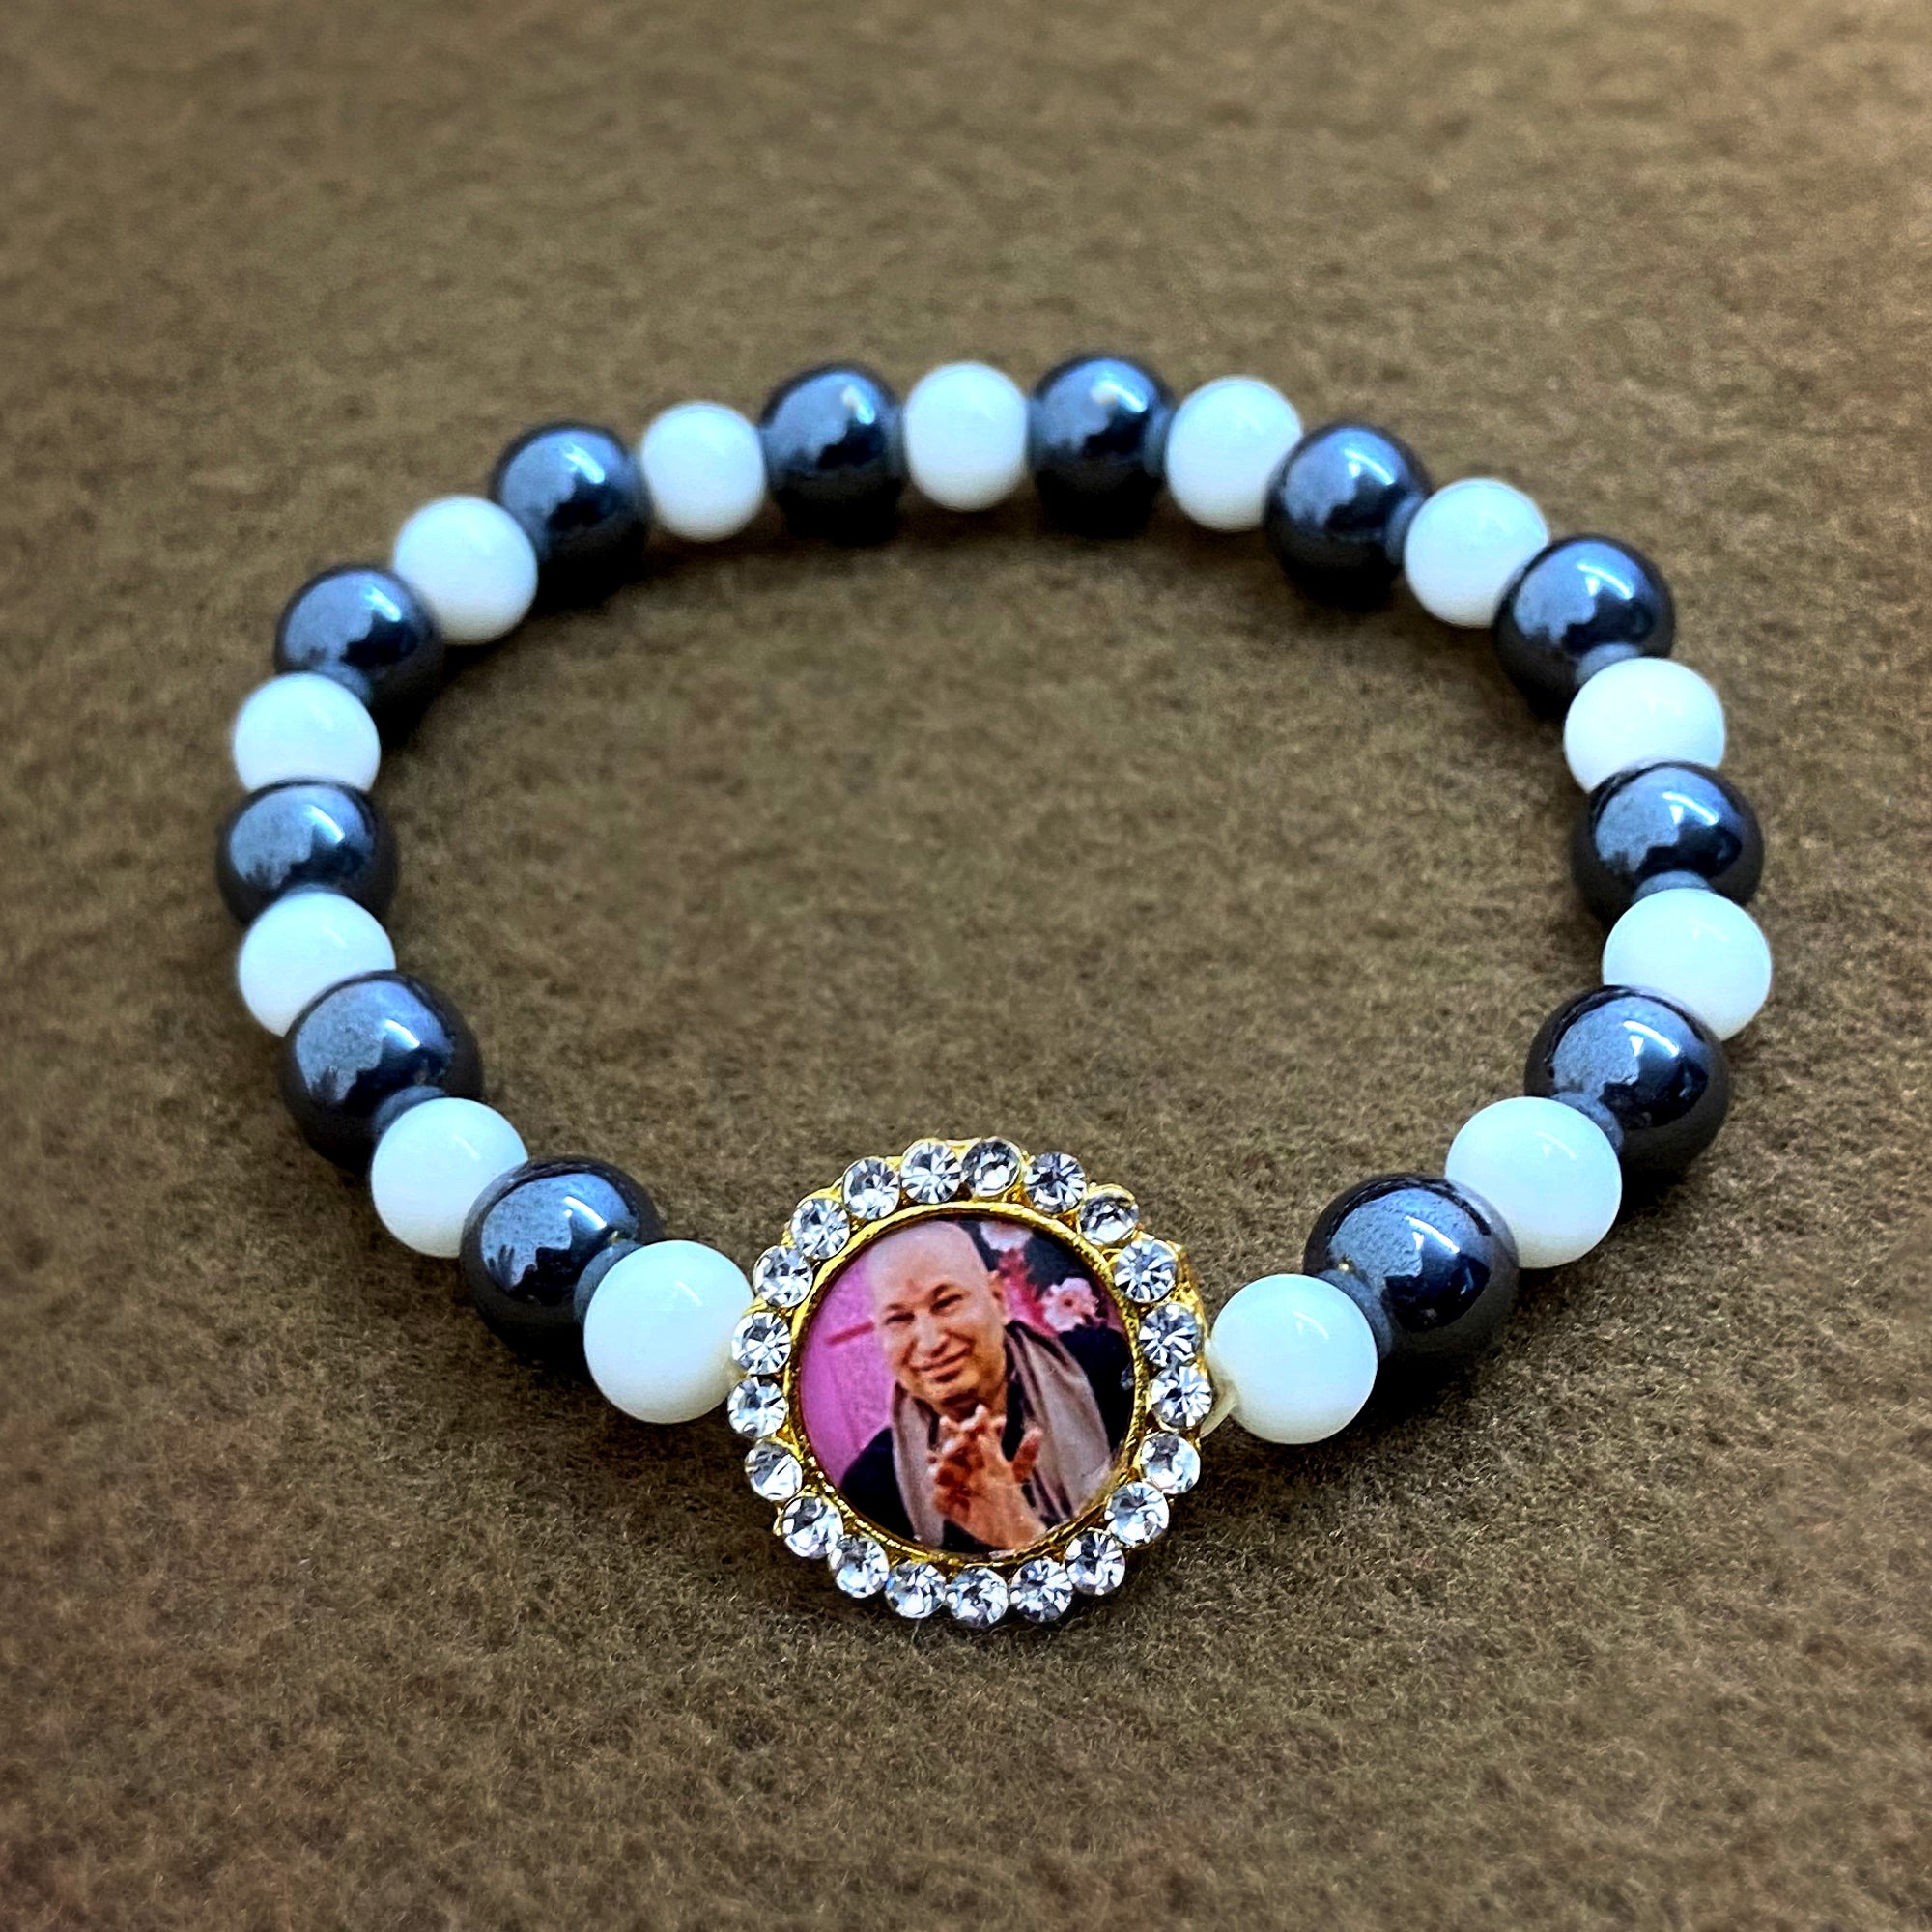 Buy Guruji bracelet at Amazonin